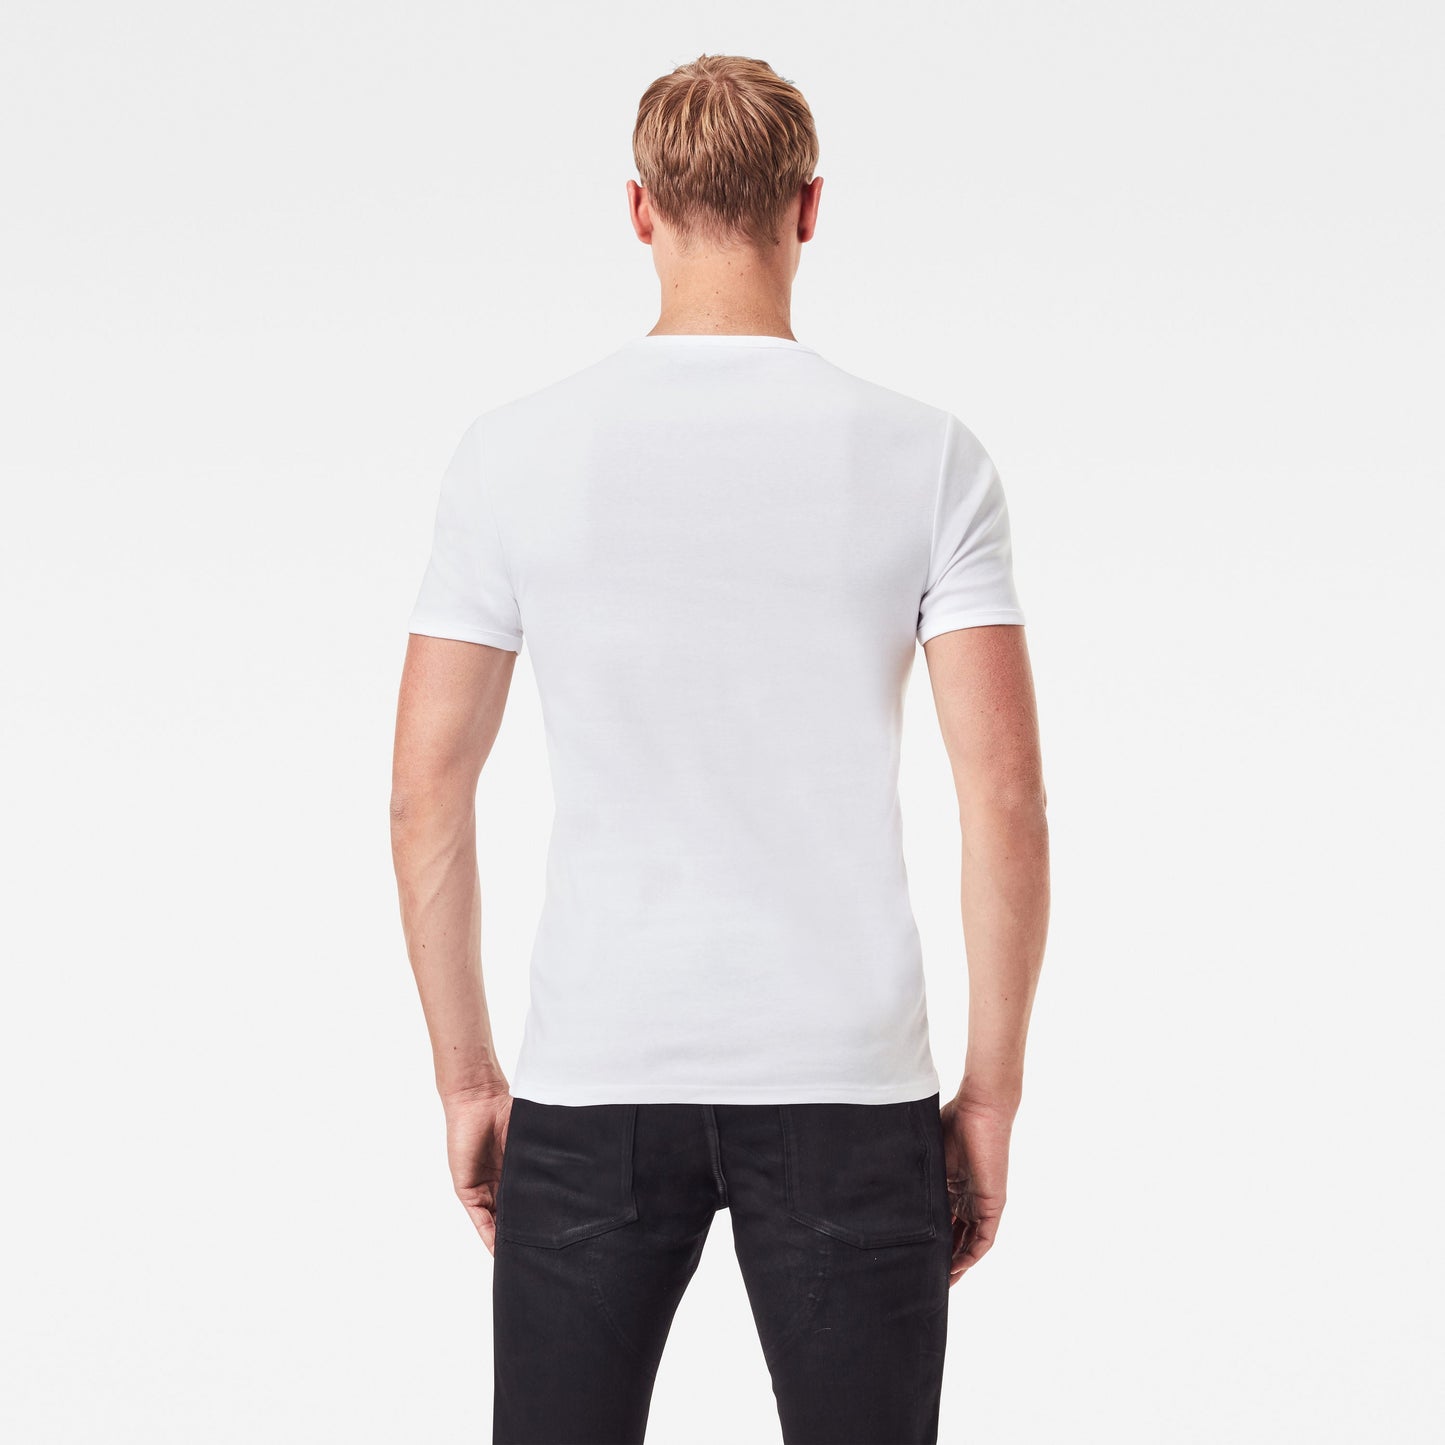 White Cotton Round Neck T-Shirts from G STAR Ireland at StylishGuy Menswear